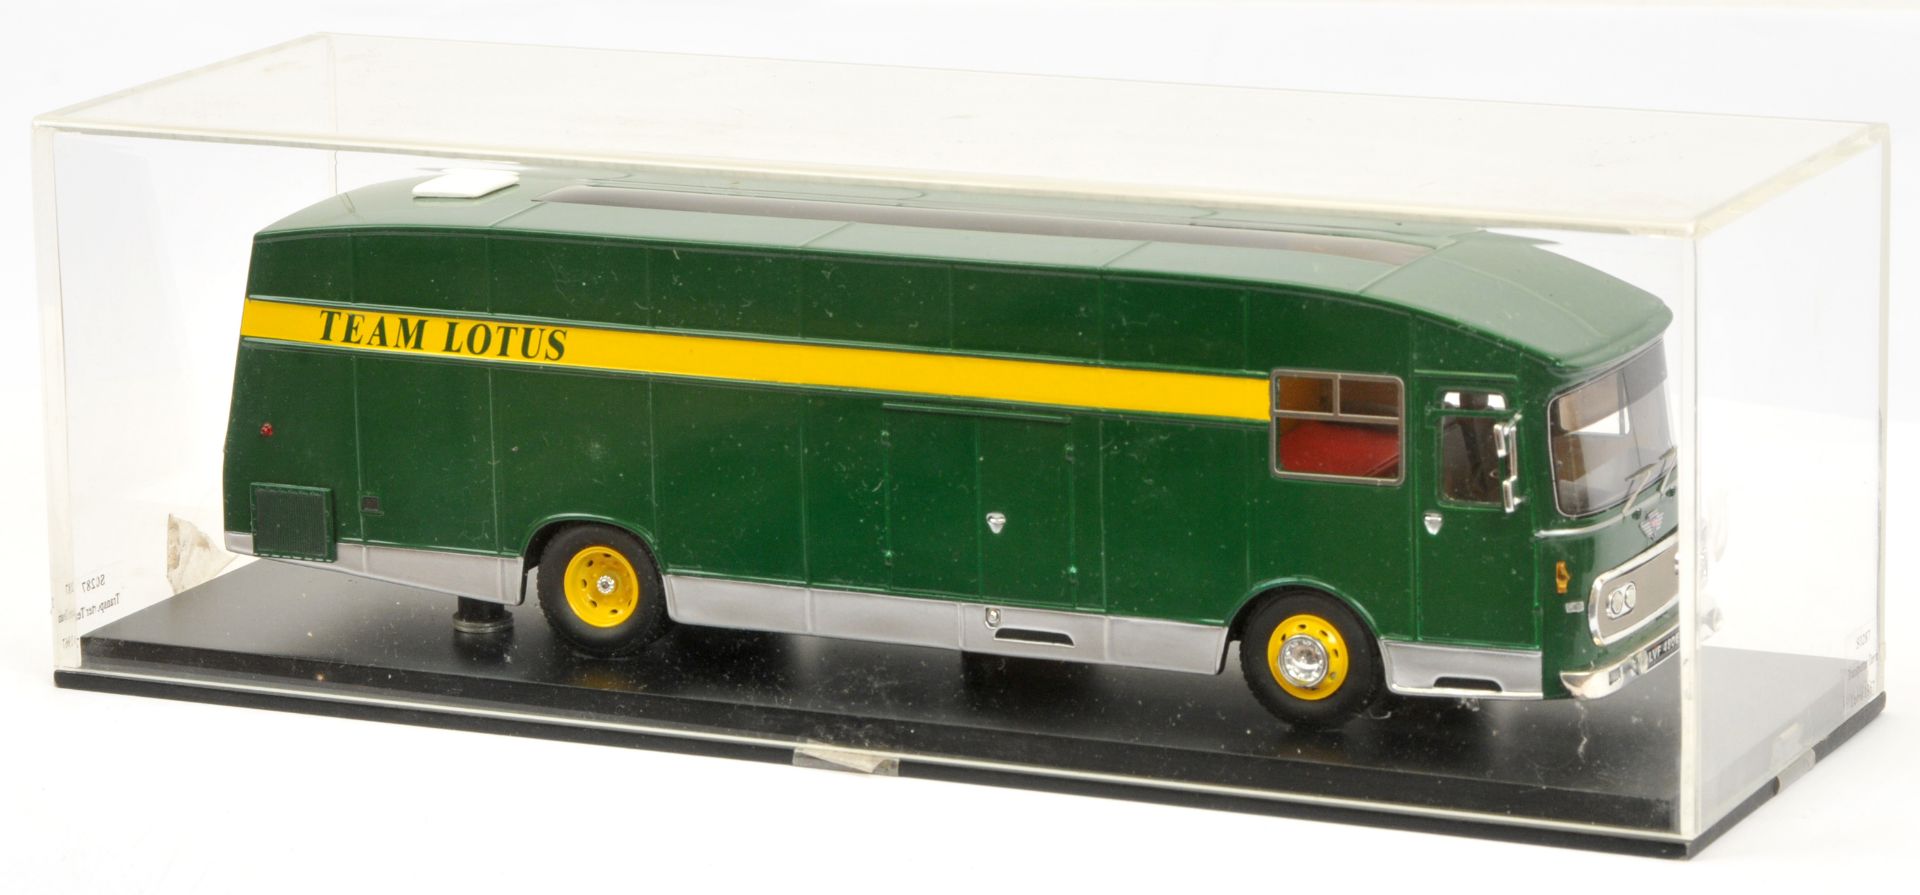 Spark S0287 1/43rd scale 1967 Lotus Team Transporter "Team Lotus" - green, yellow, silver, yellow... - Bild 2 aus 2